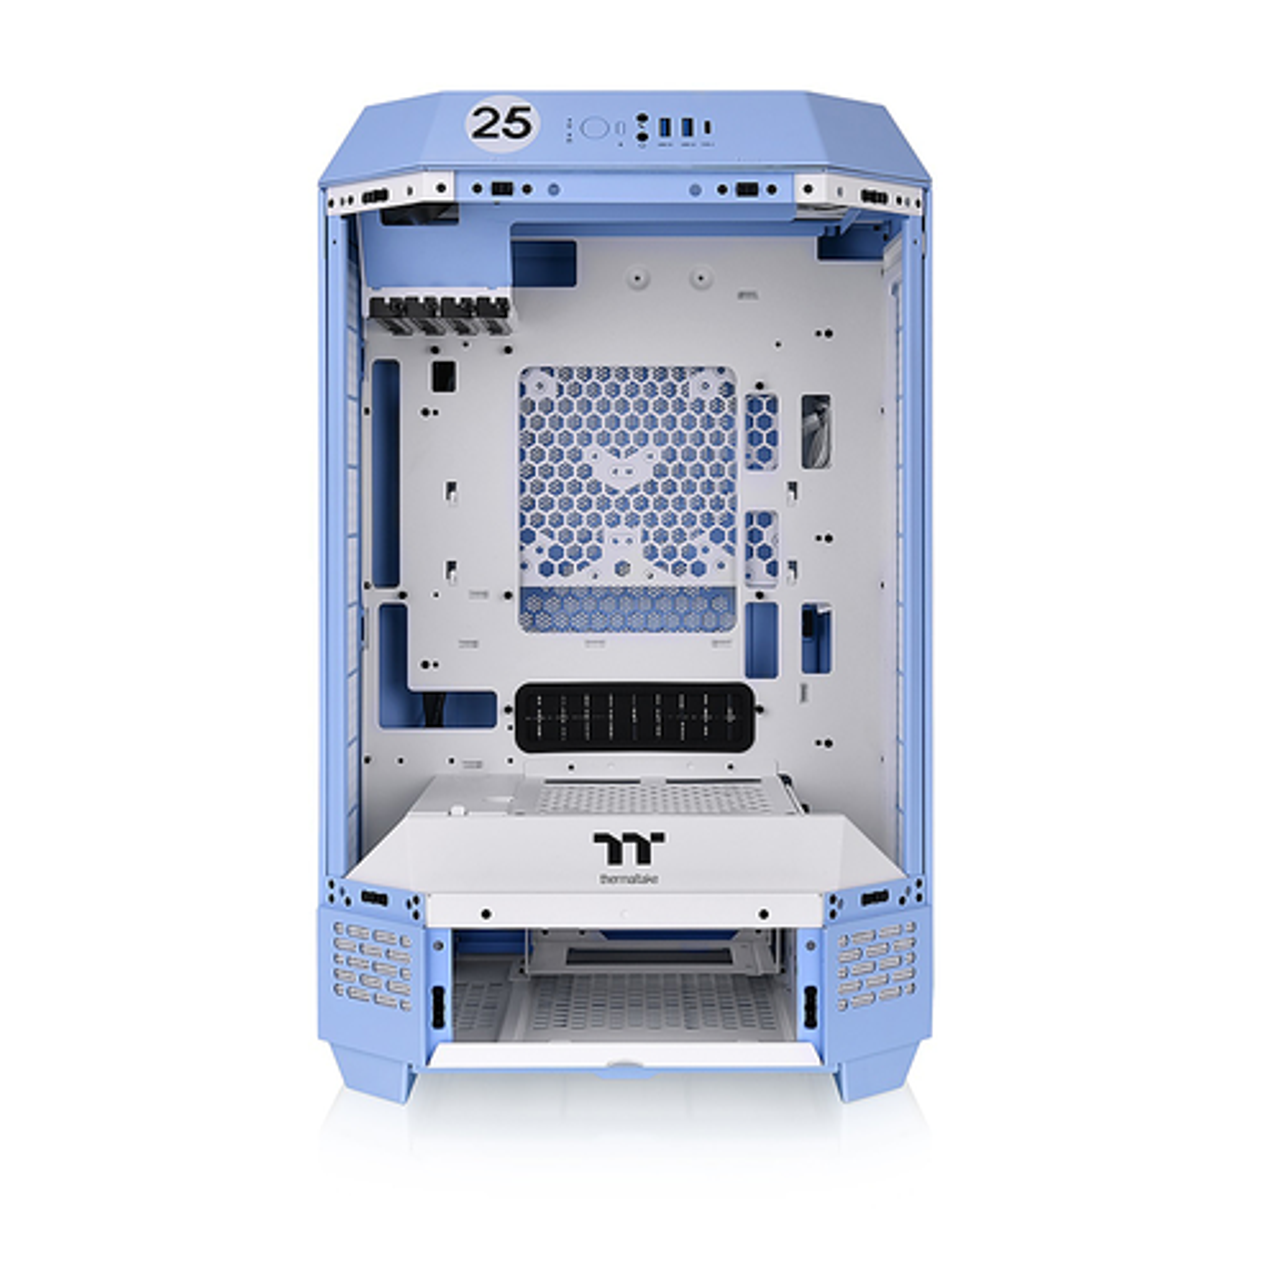 Thermaltake - The Tower 300 Micro ATX Case - Hydrangea Blue